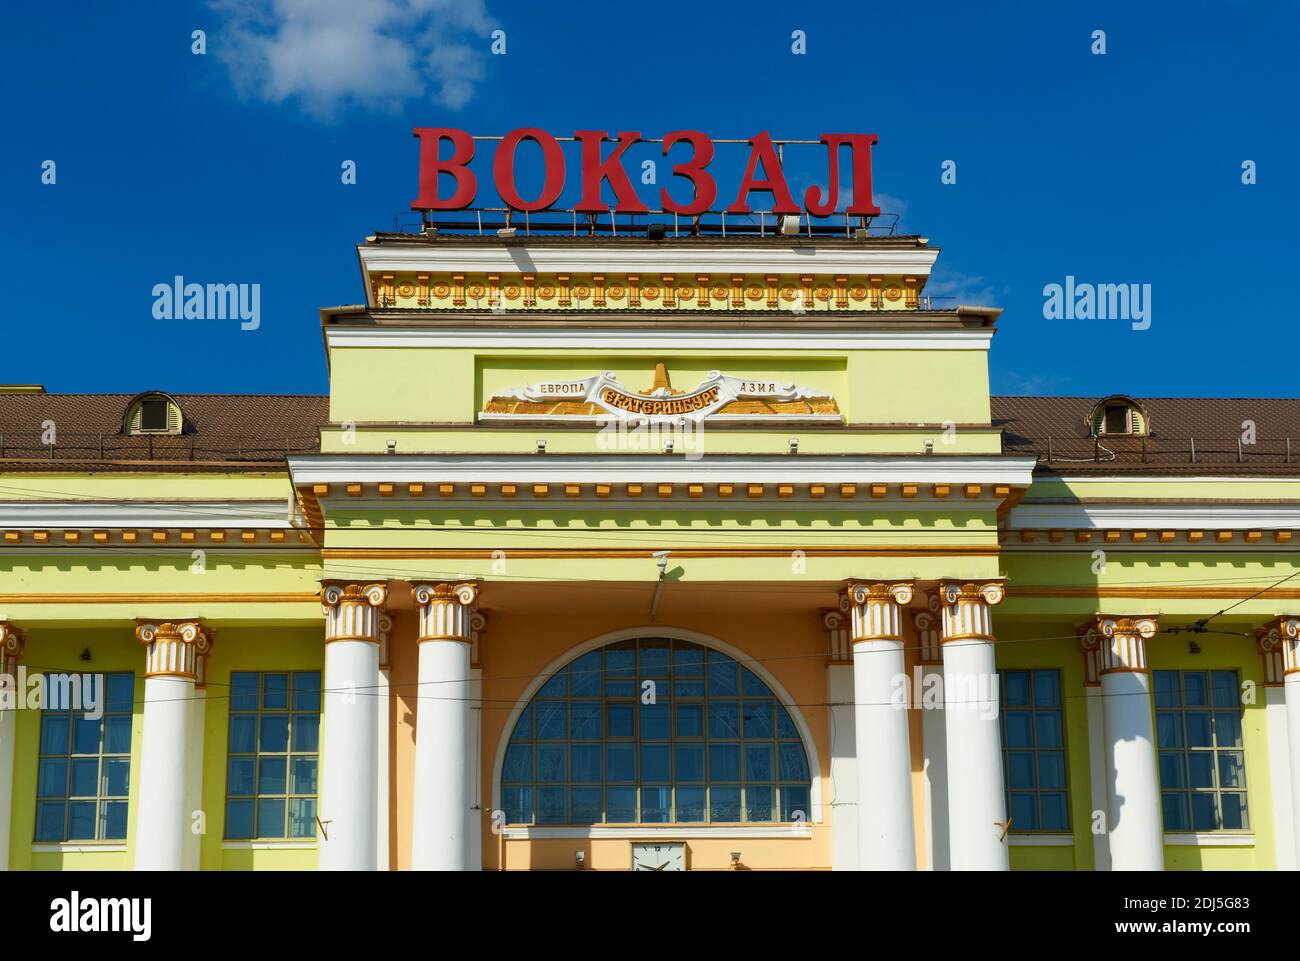 Russia, Ekaterinburg or Yekaterinburg, Railway station on the Trans-Siberian trail Stock Photo